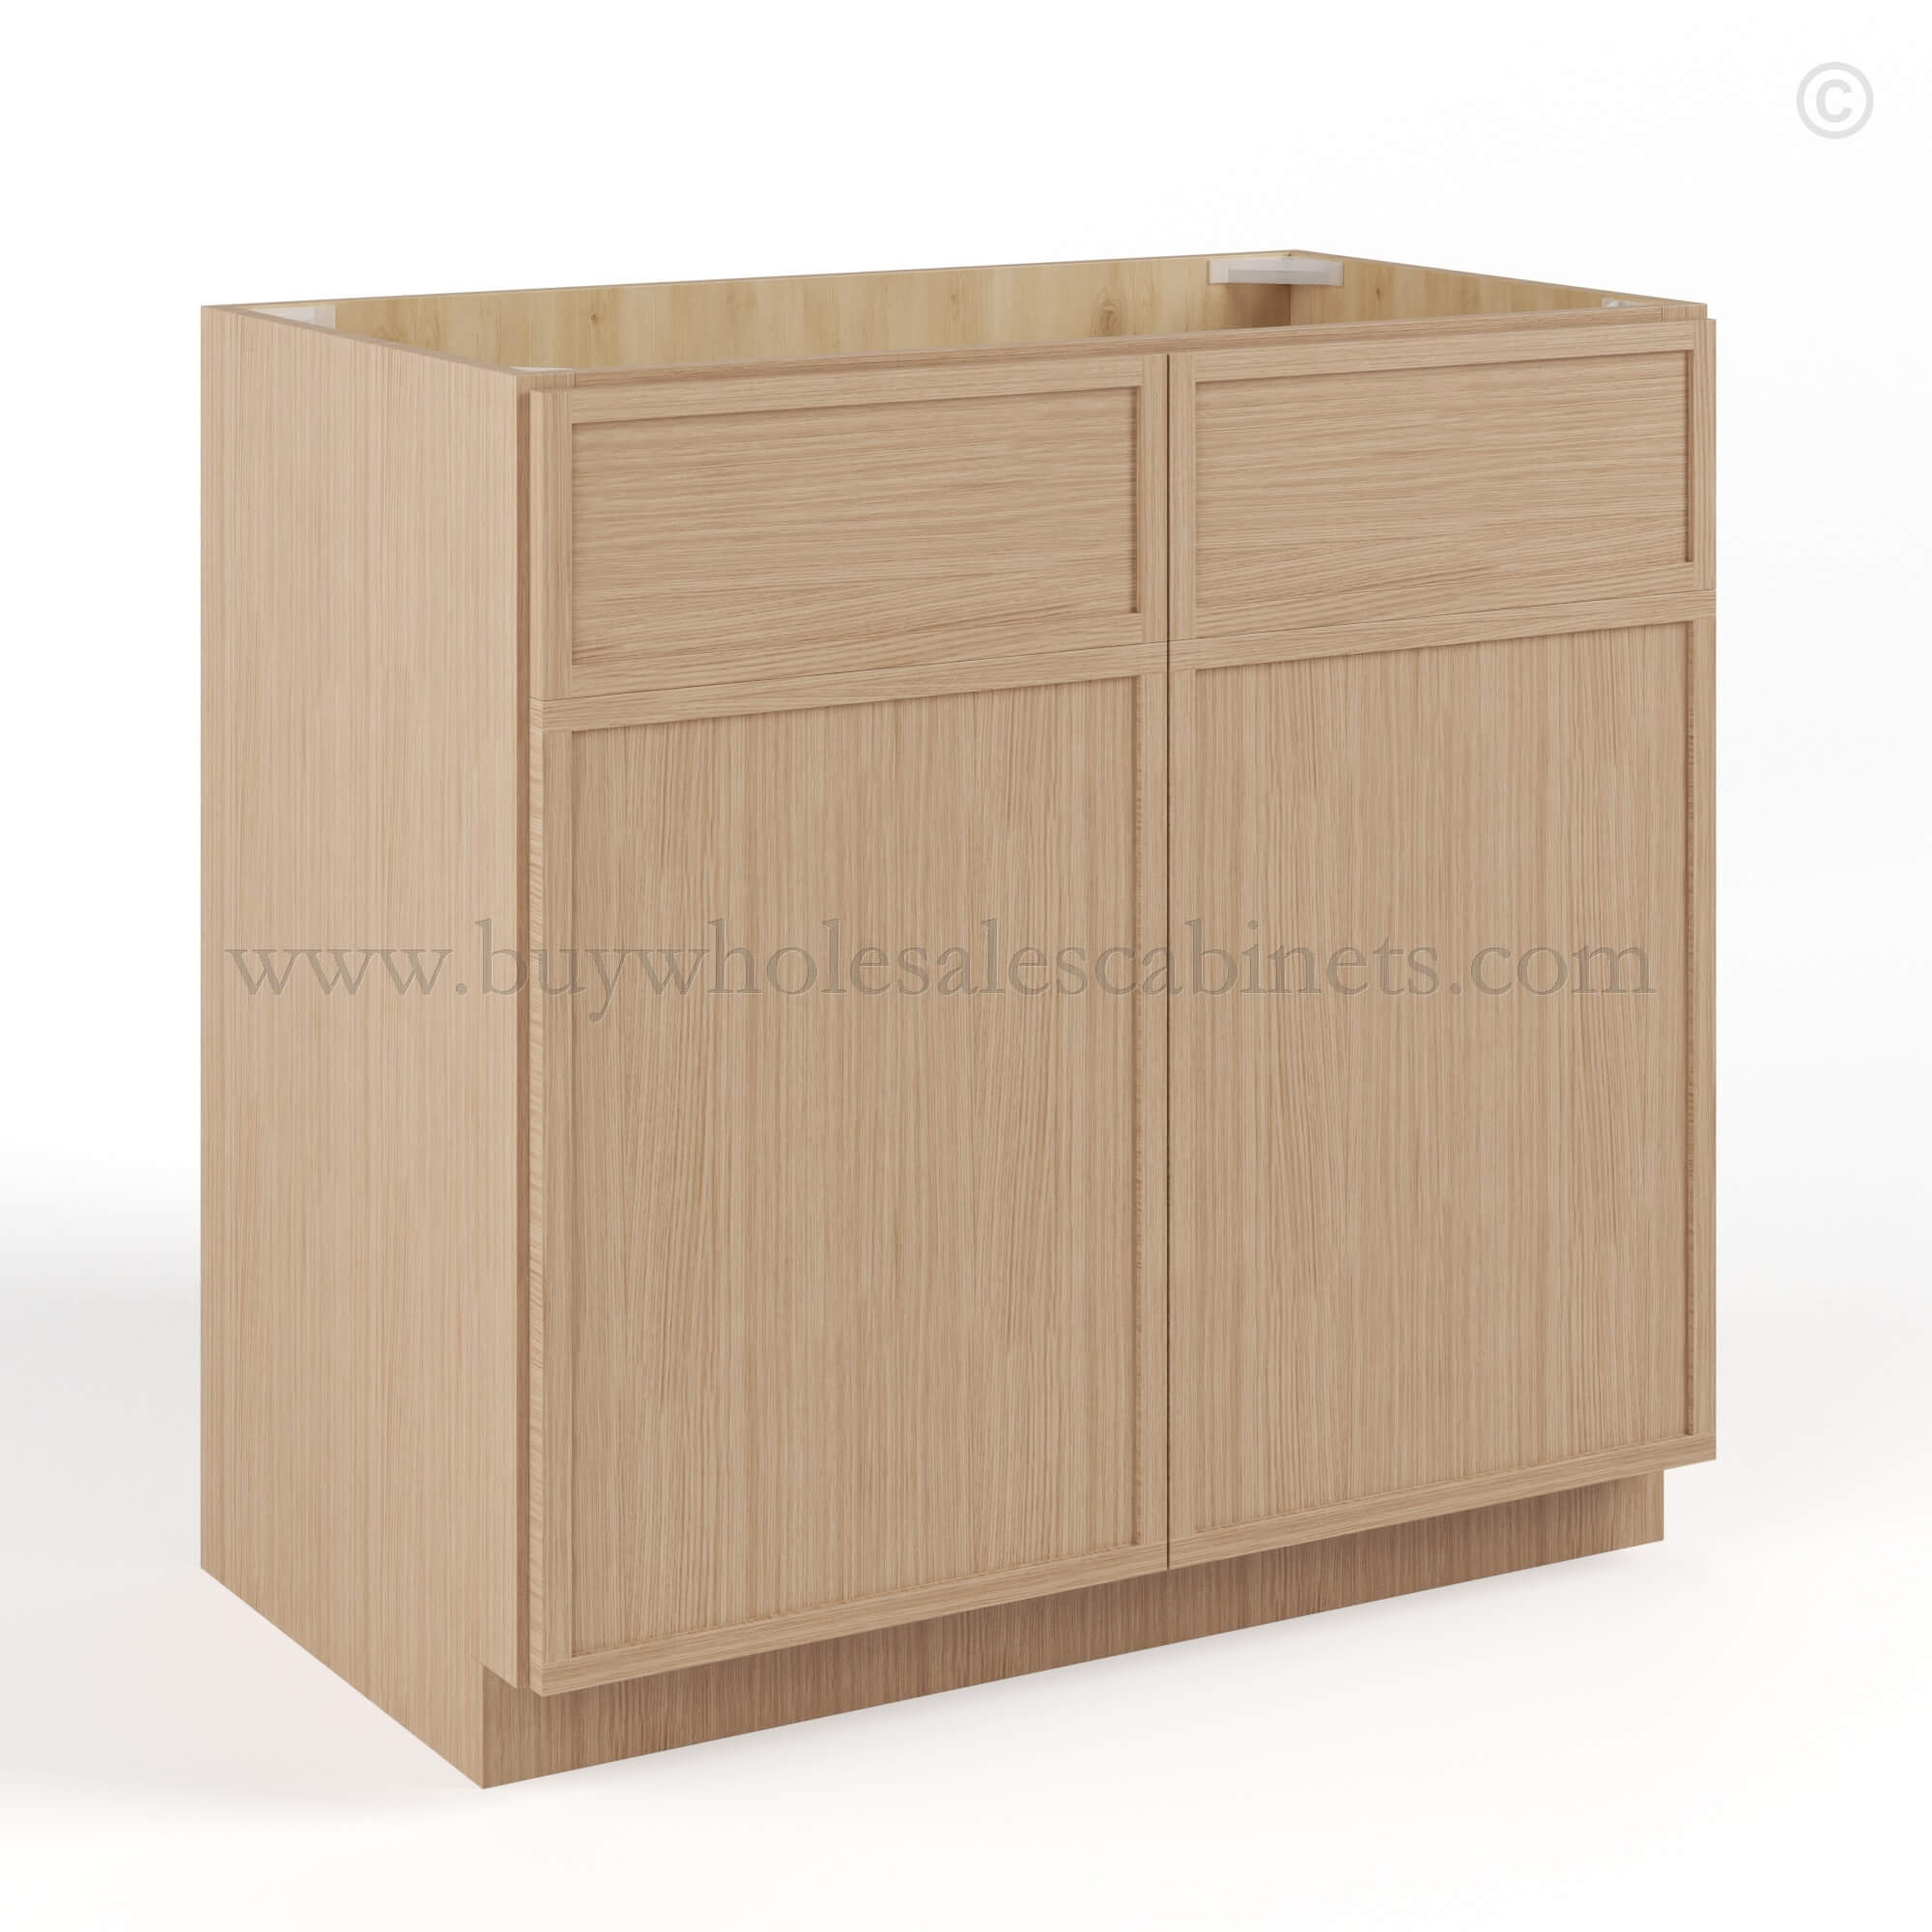 Slim Oak Shaker Vanity Sink Cabinet, rta cabinets, wholesale cabinets